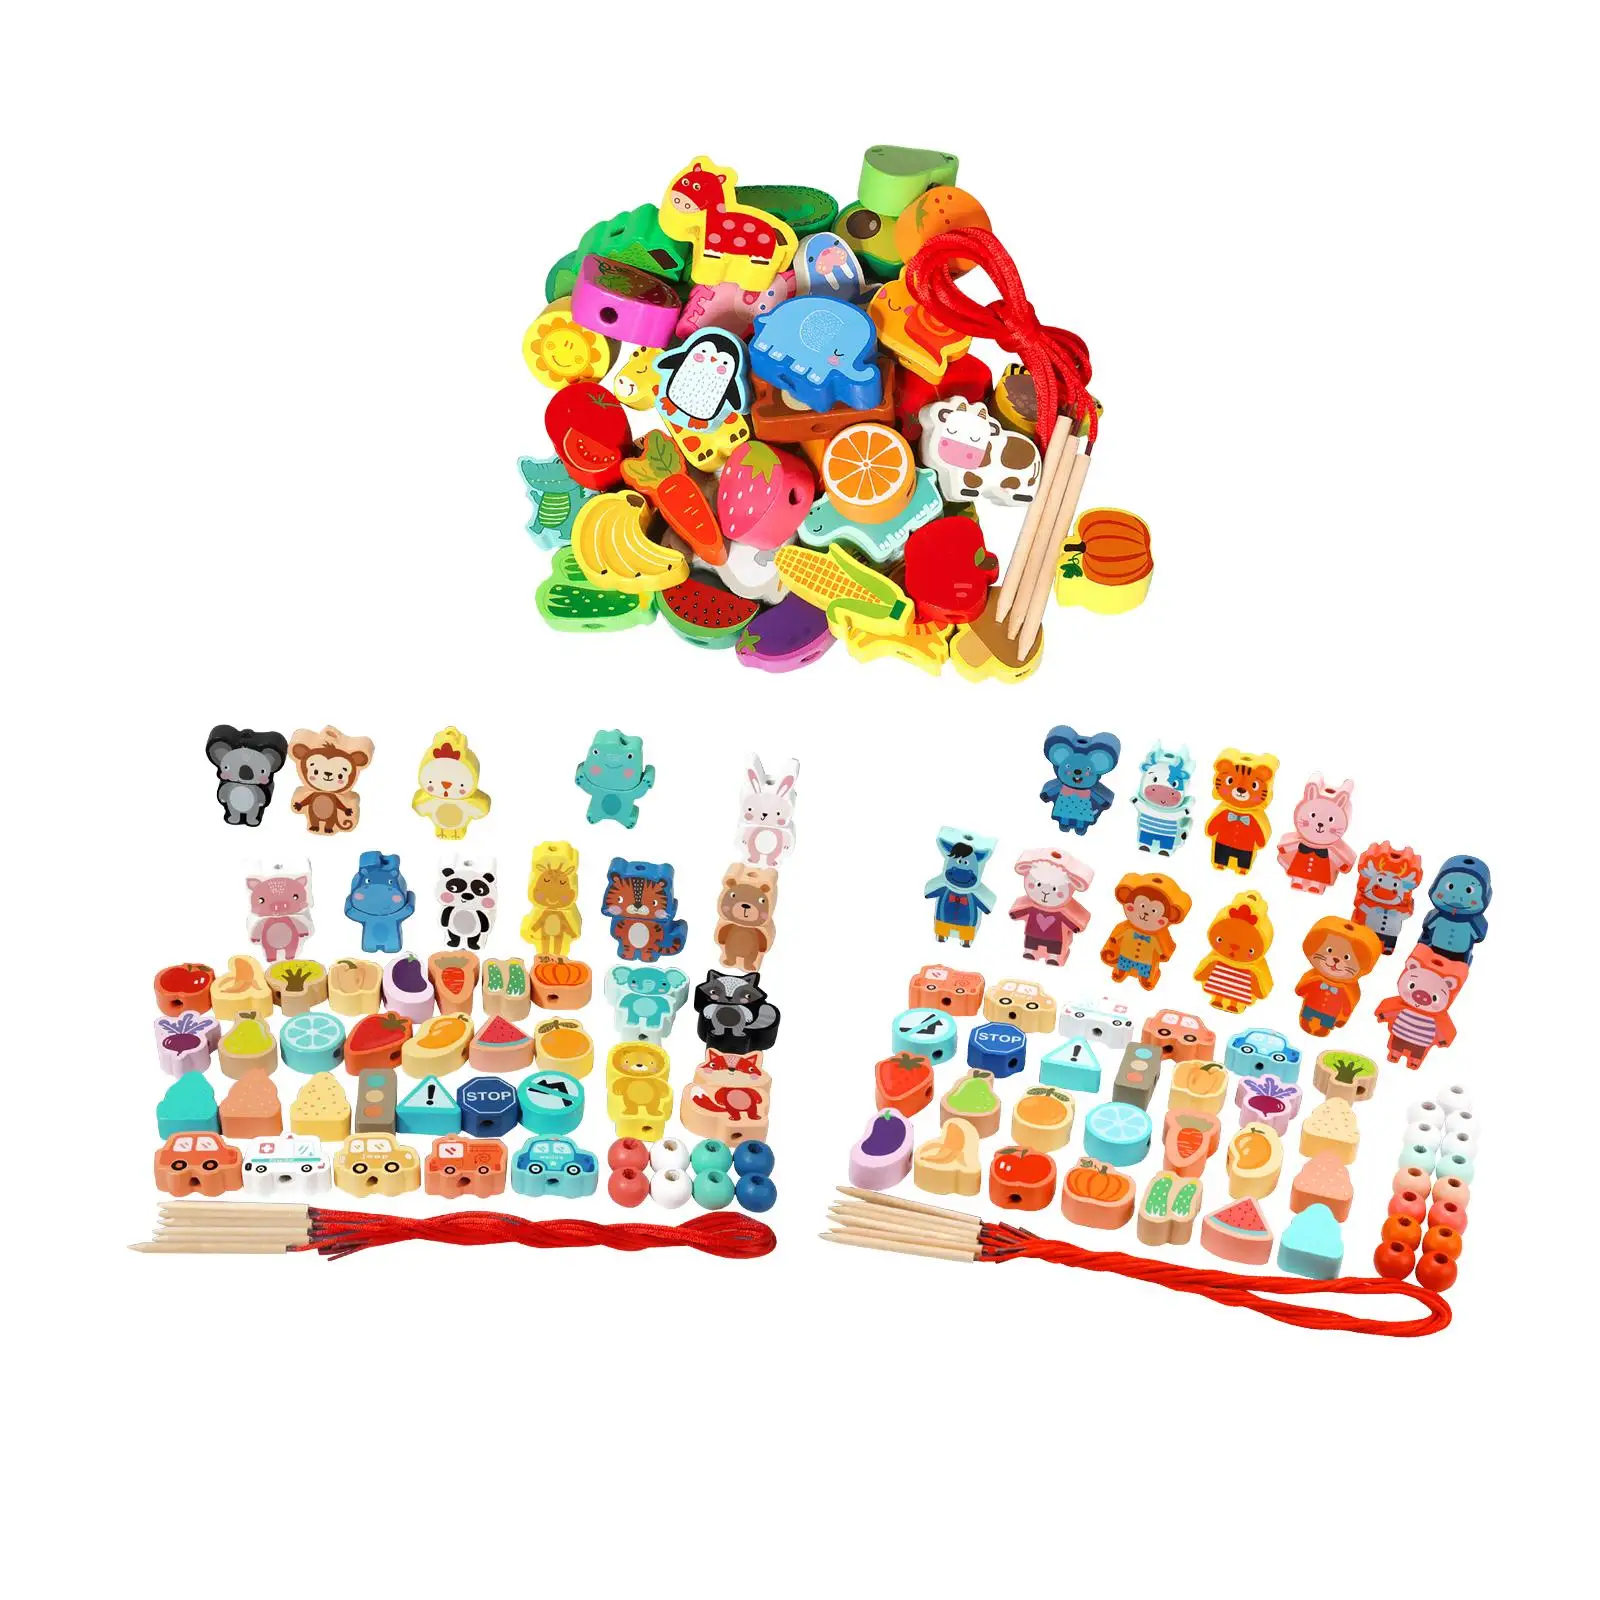 Montessori Educational Wooden Lacing Beads Toys Preschool Toys Threading DIY Developmental Toy for 3 4 5 Year Old Girls Boys